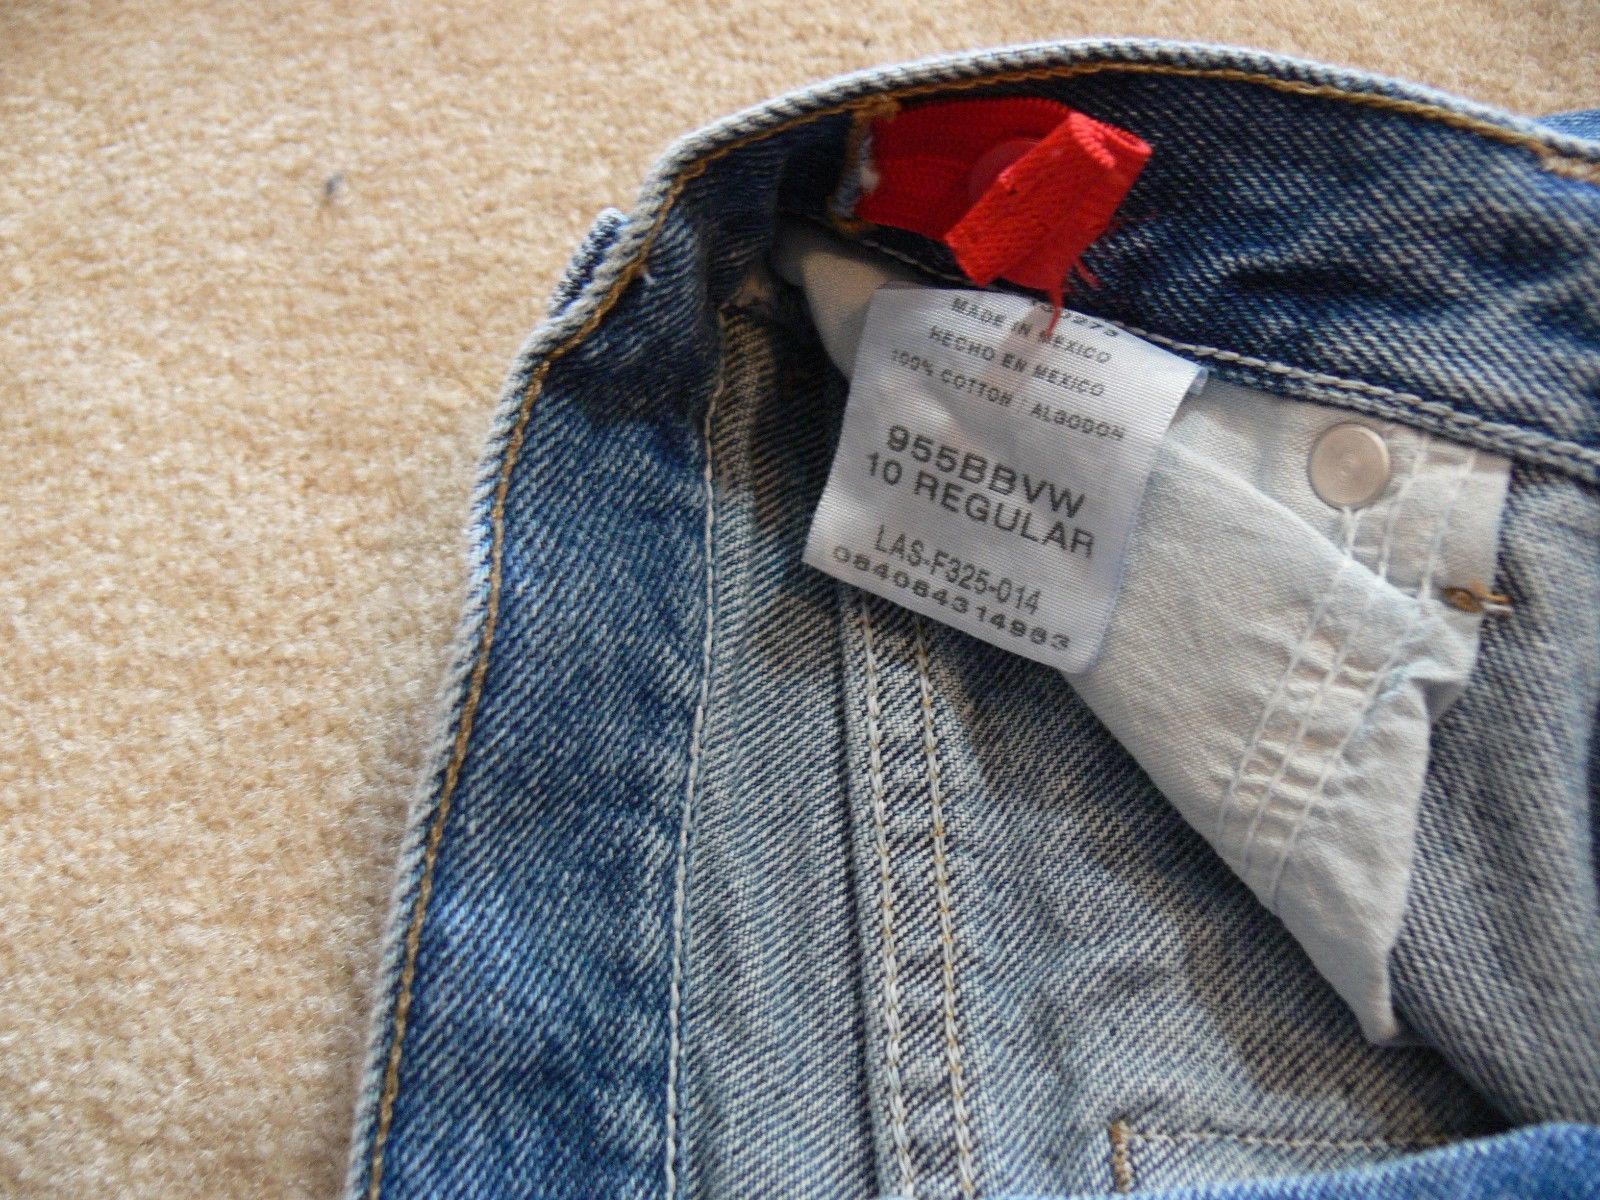 wrangler adjustable waist jeans